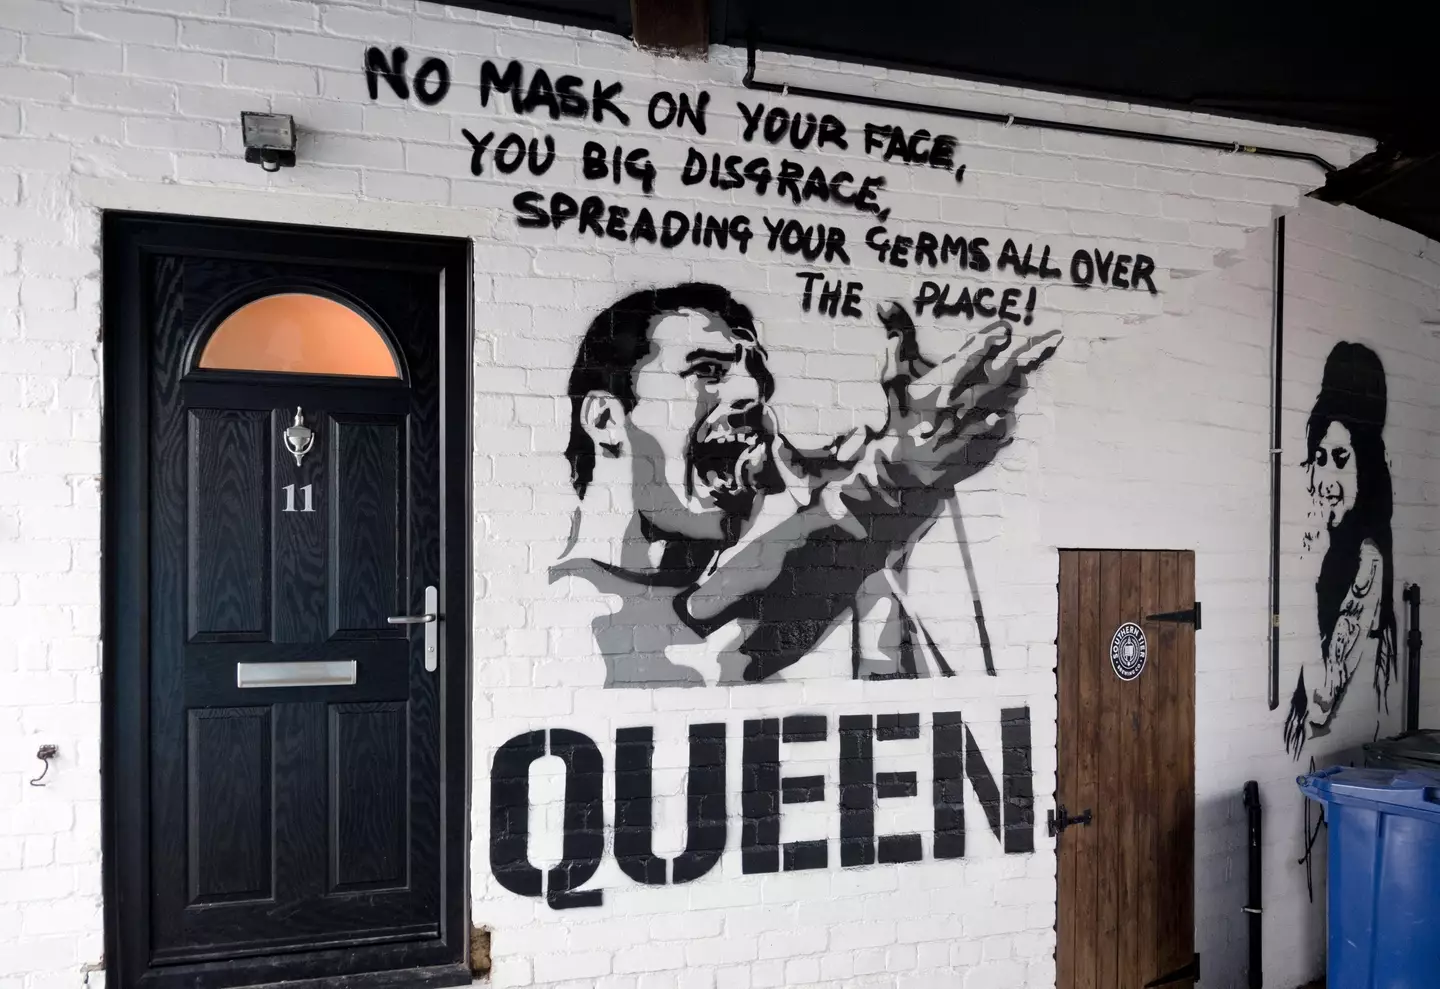 Covid-19 mask wearing Freddie Mercury / Queen graffiti art, Skipton, North Yorkshire, UK.